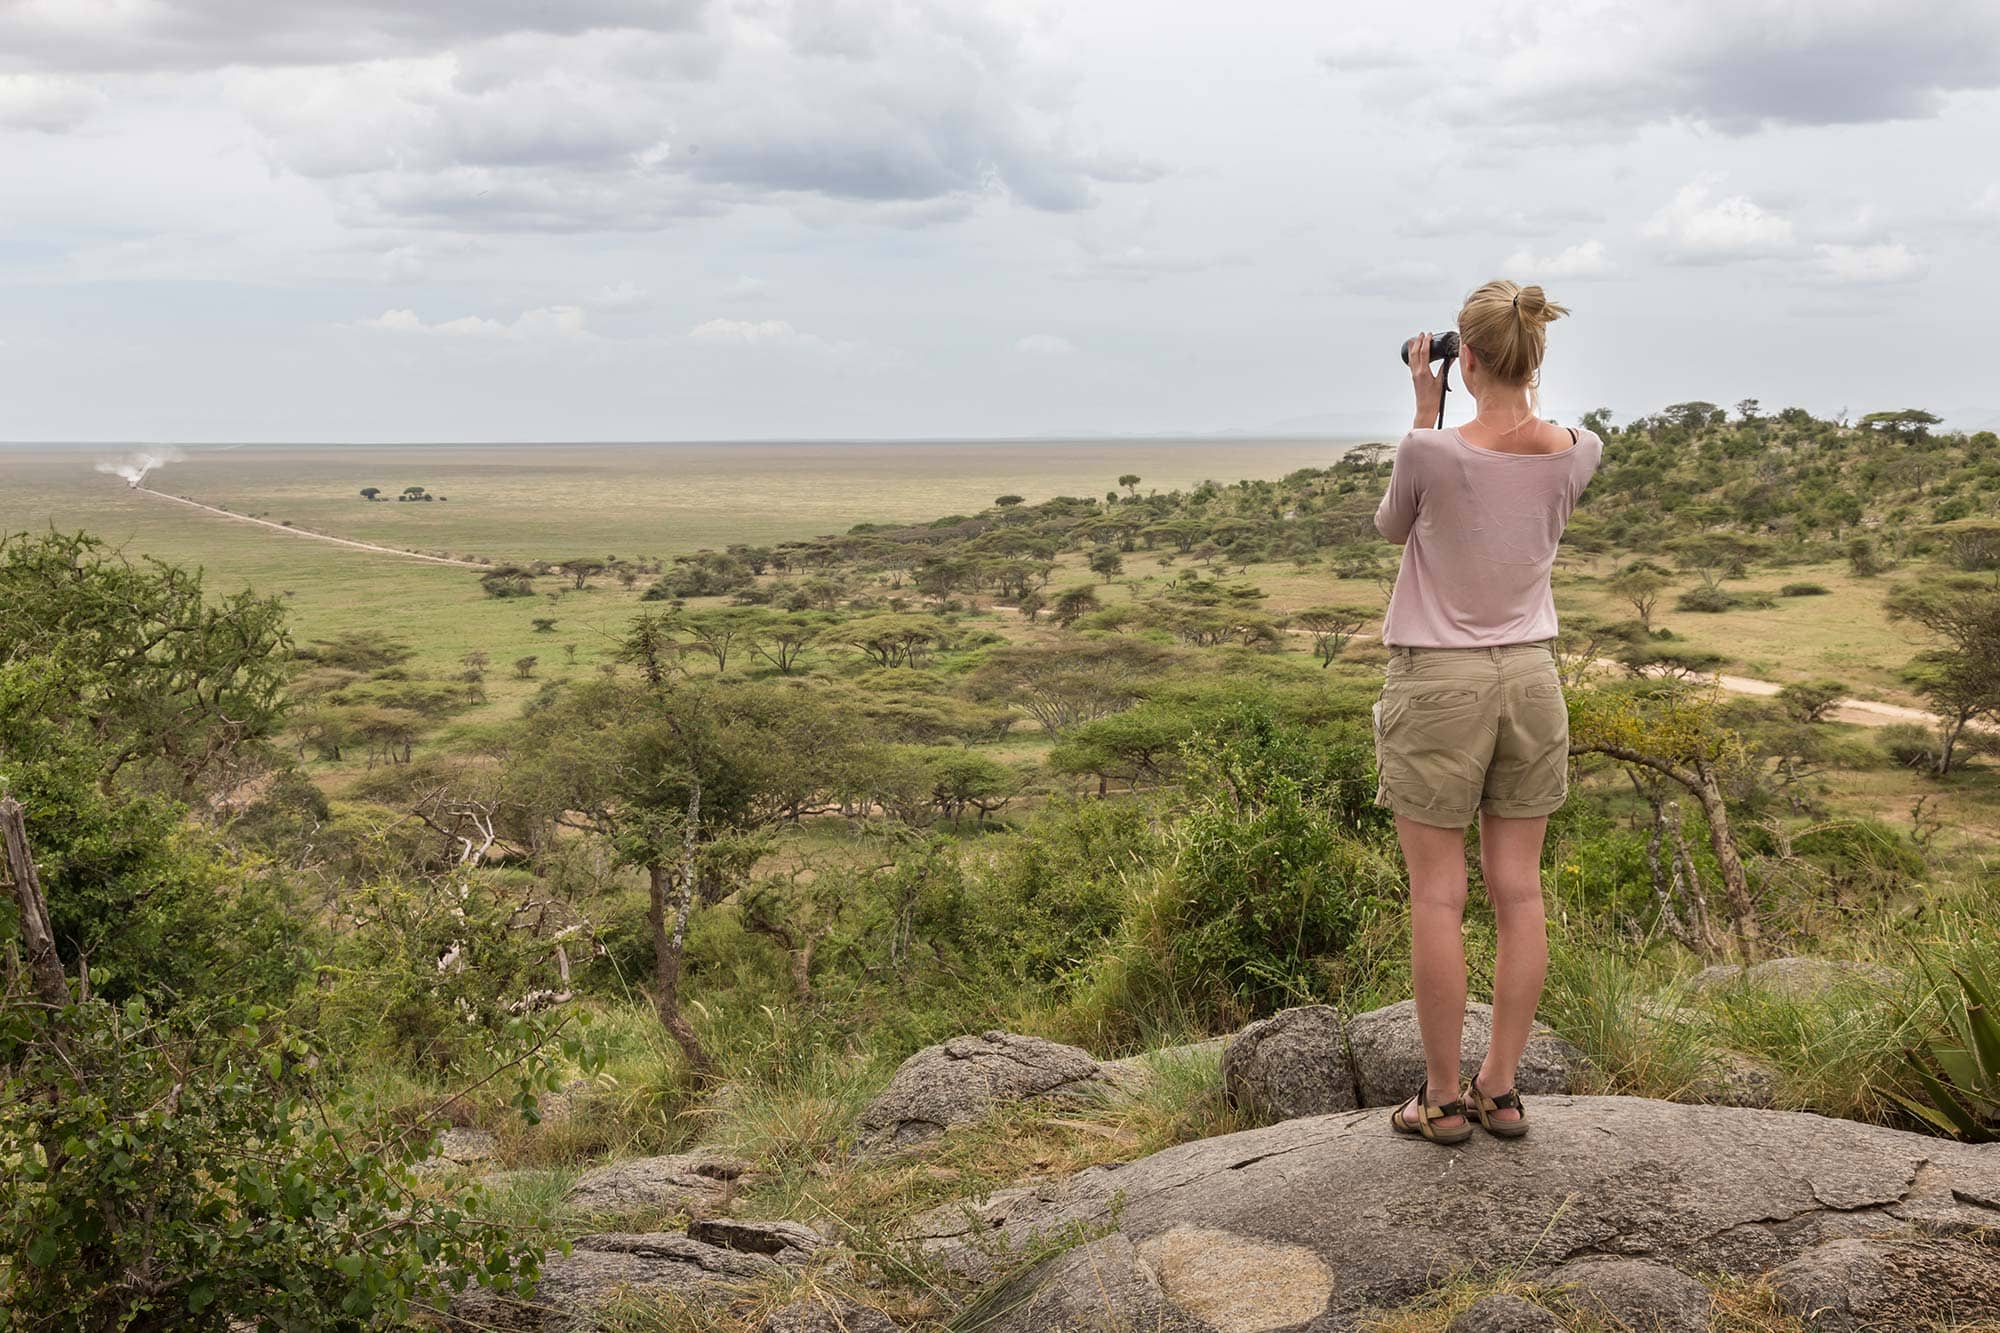 Woman taking photos in the Serengeti with appropriate safari attire